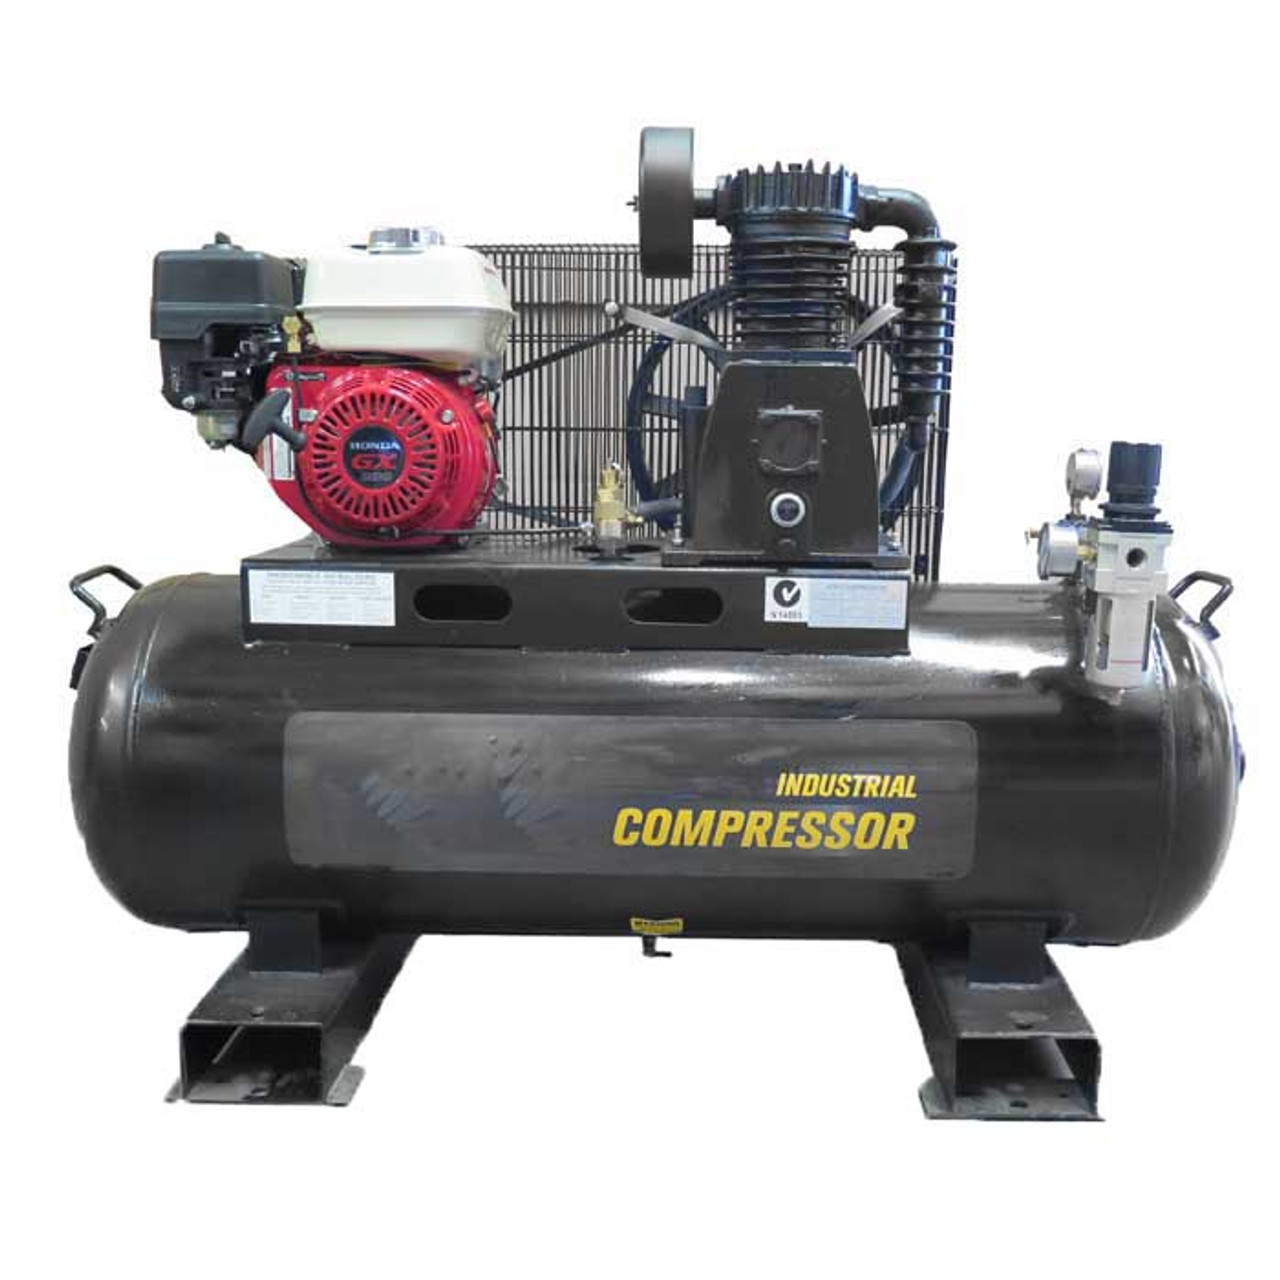 Steam air compressor фото 66